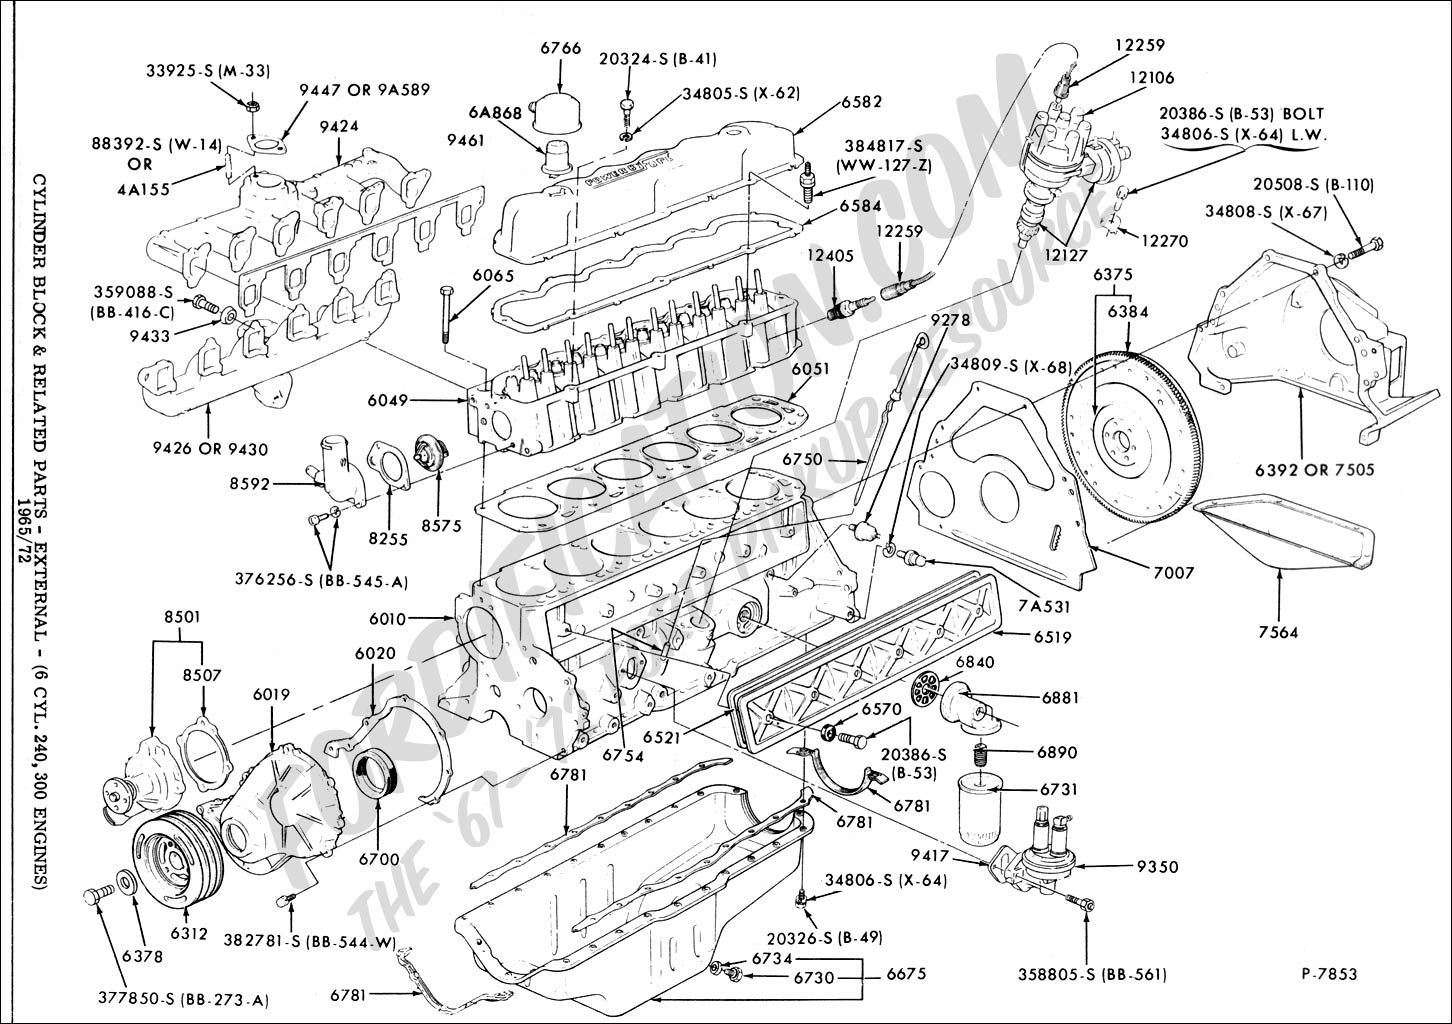 Diagram] Ford F 150 Straight 6 Engine Diagram Full Version